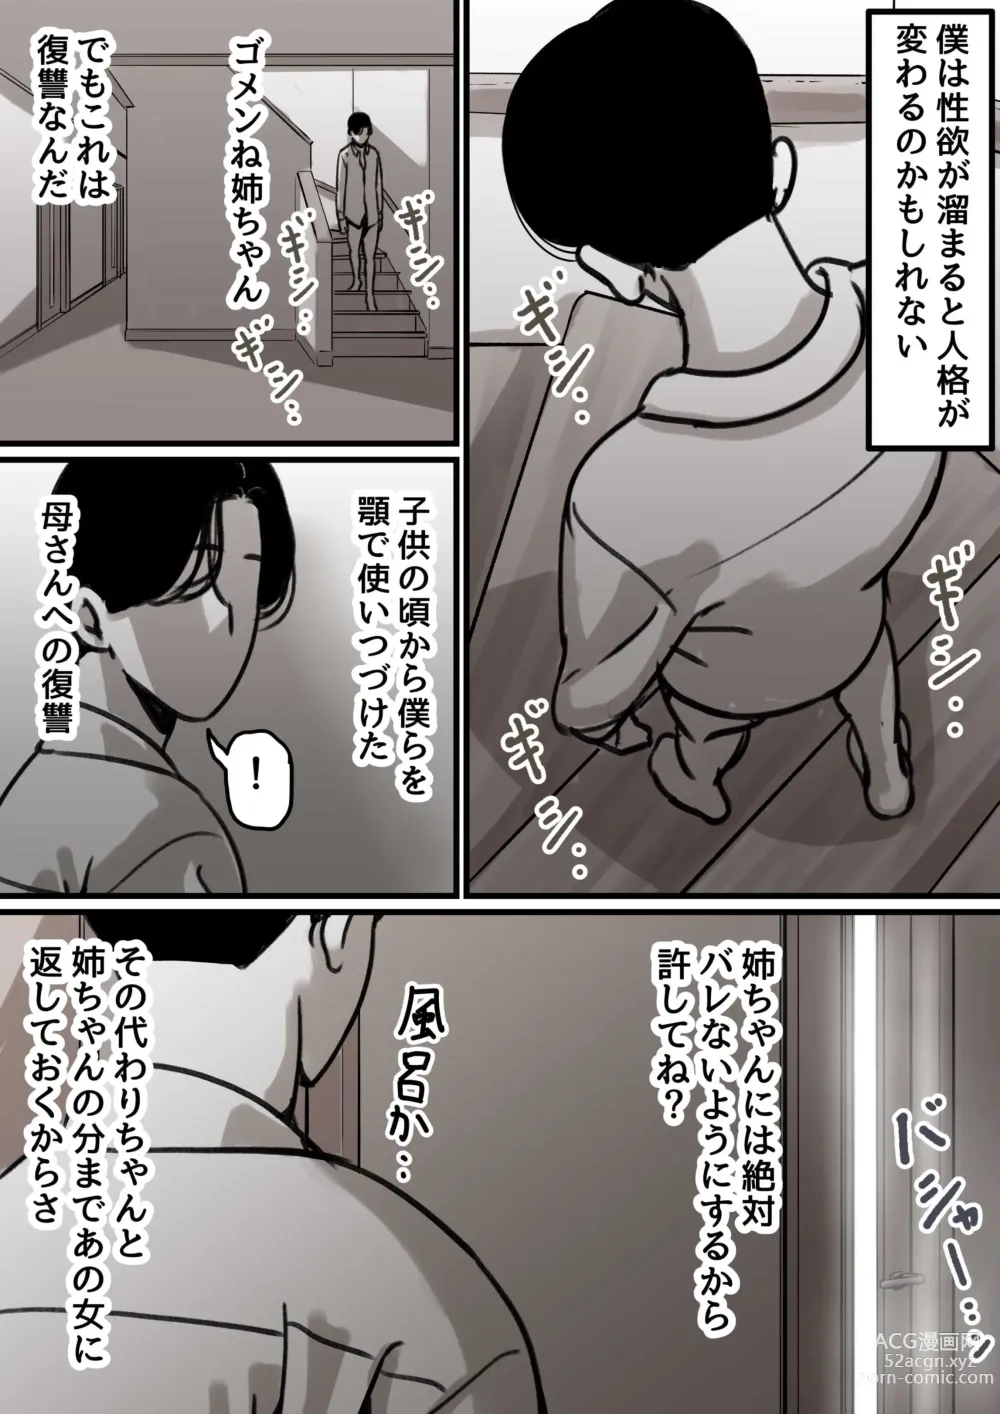 Page 7 of doujinshi Haha to Ochite Iku Part 2